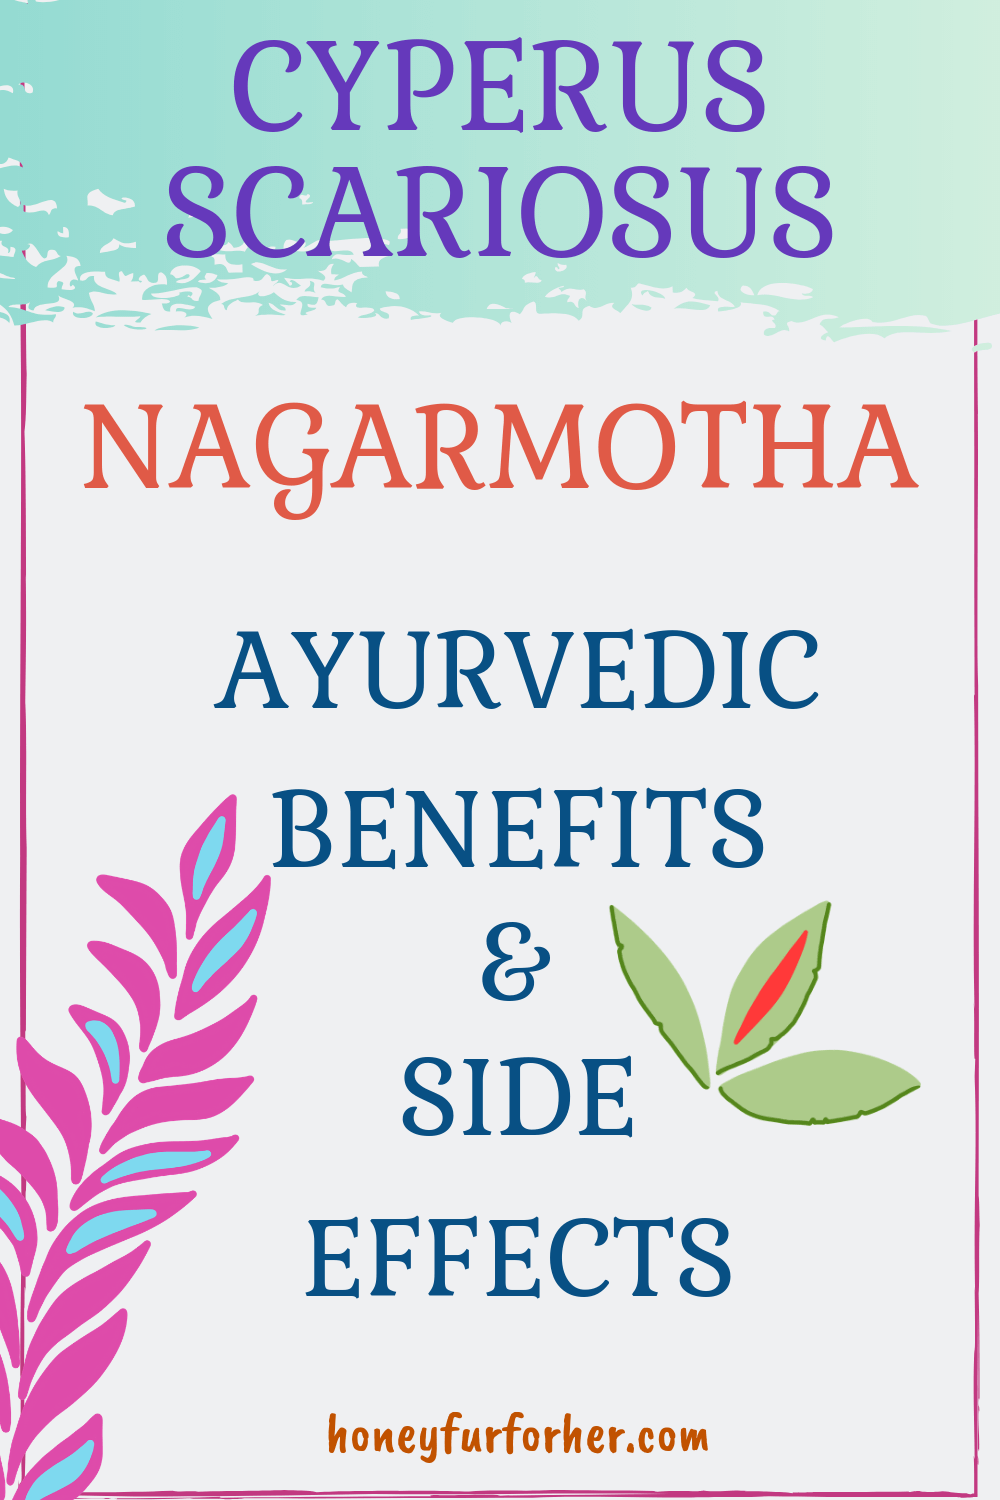 Nagarmotha Benefits and Side Effects Pinterest Pin New